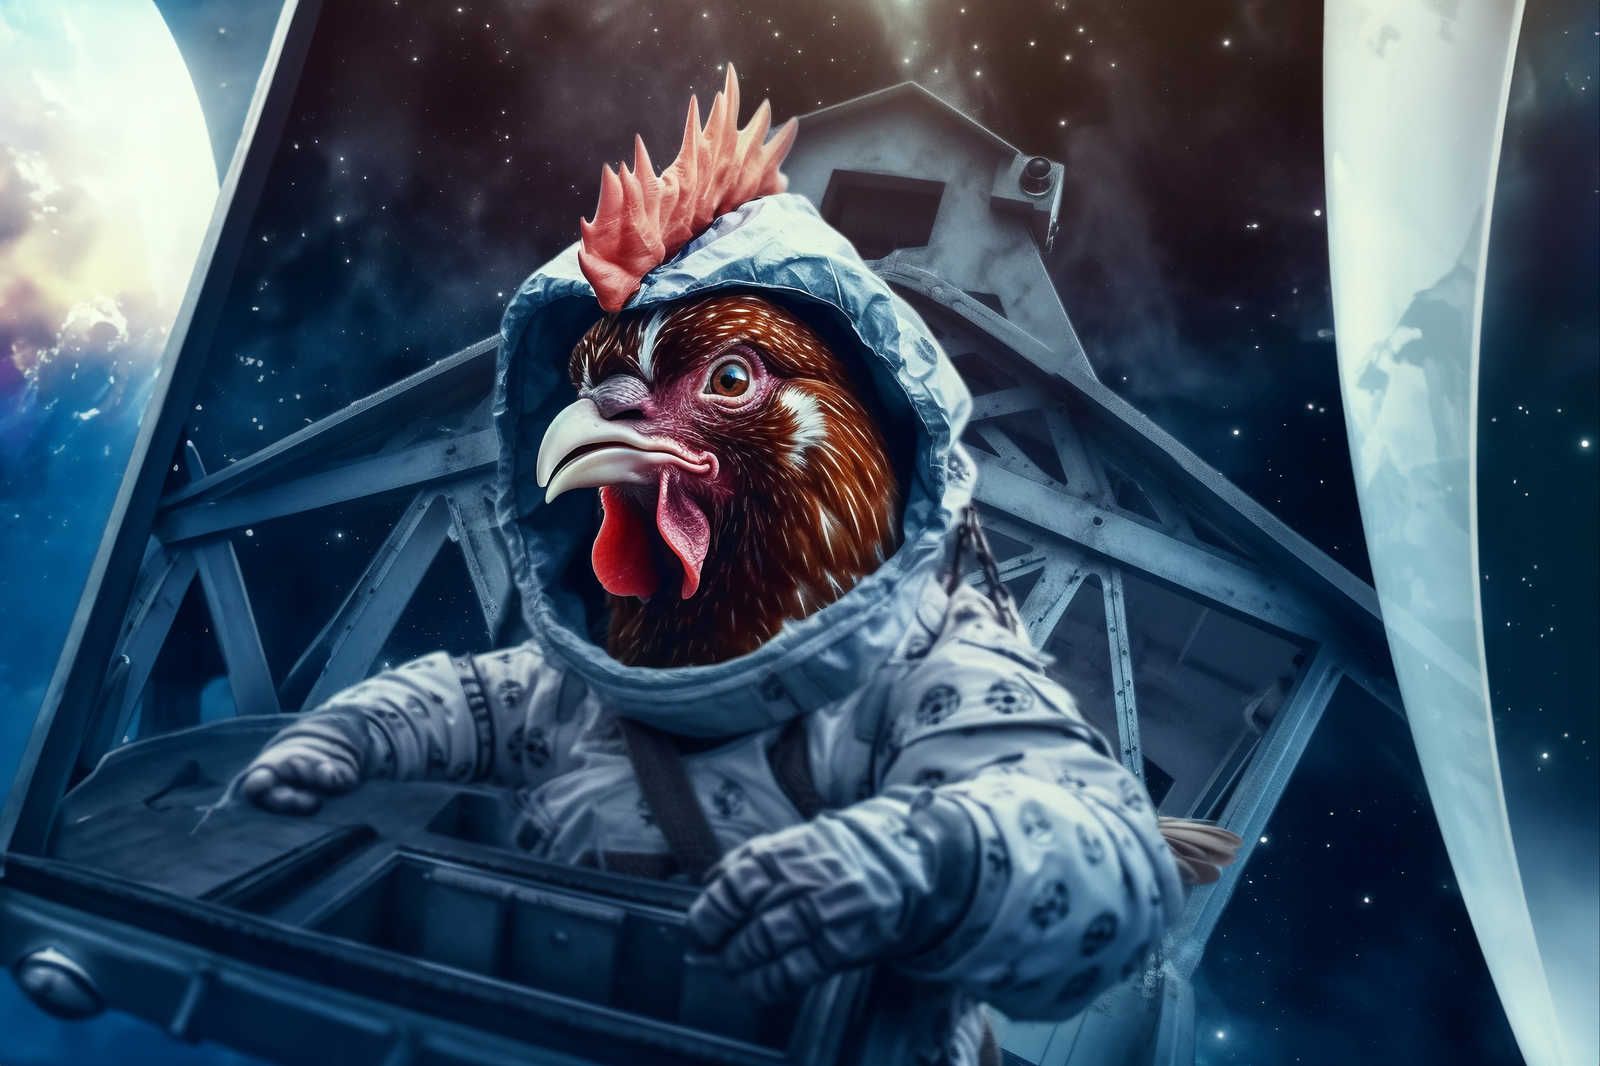             KI Canvas painting »Space Chicken« - 120 cm x 80 cm
        